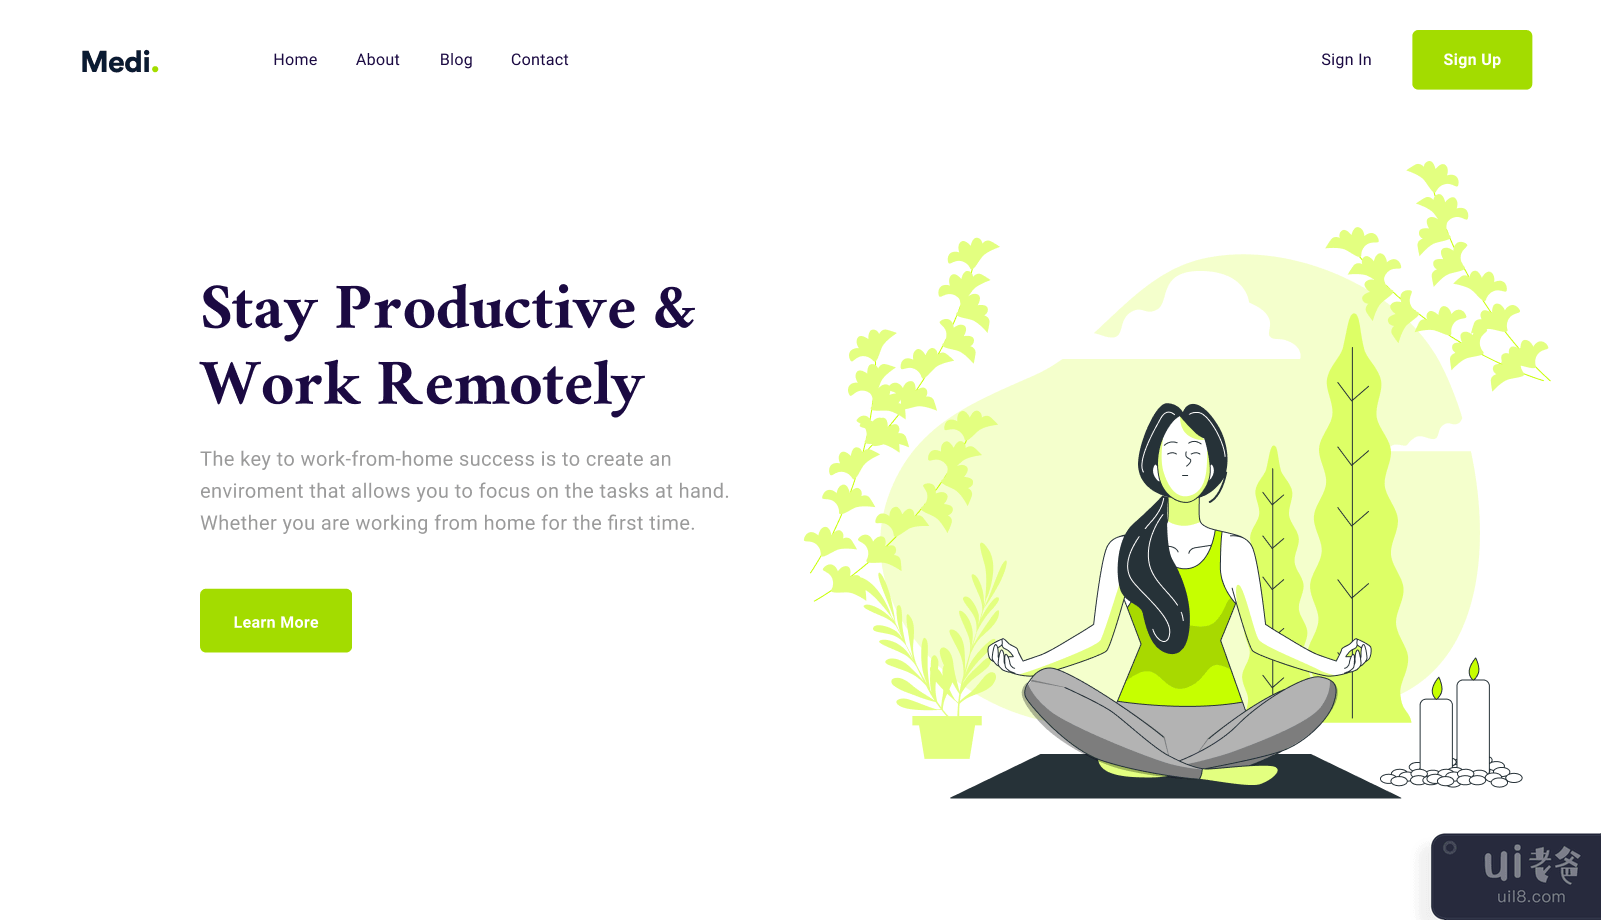 冥想 - 网页标题(Meditation - Web Headers)插图4